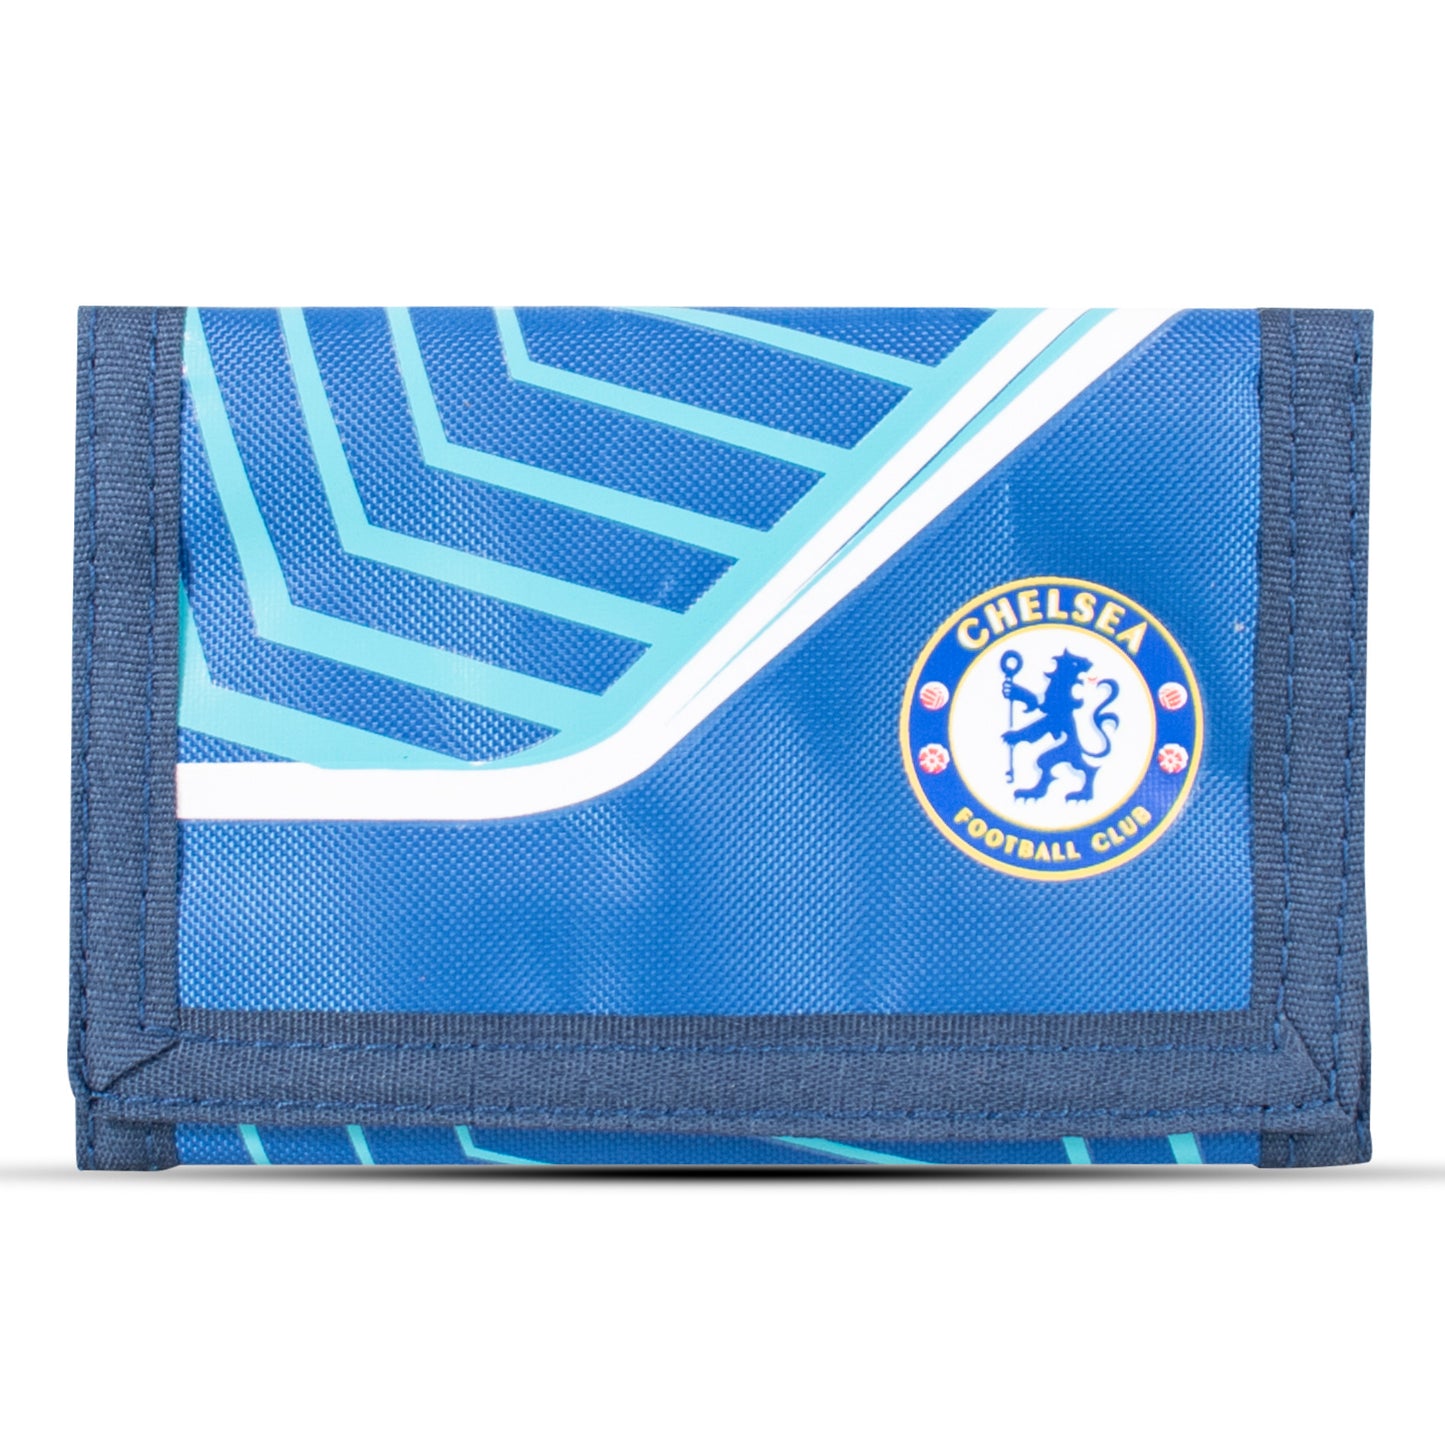 Chelsea Flash Wallet